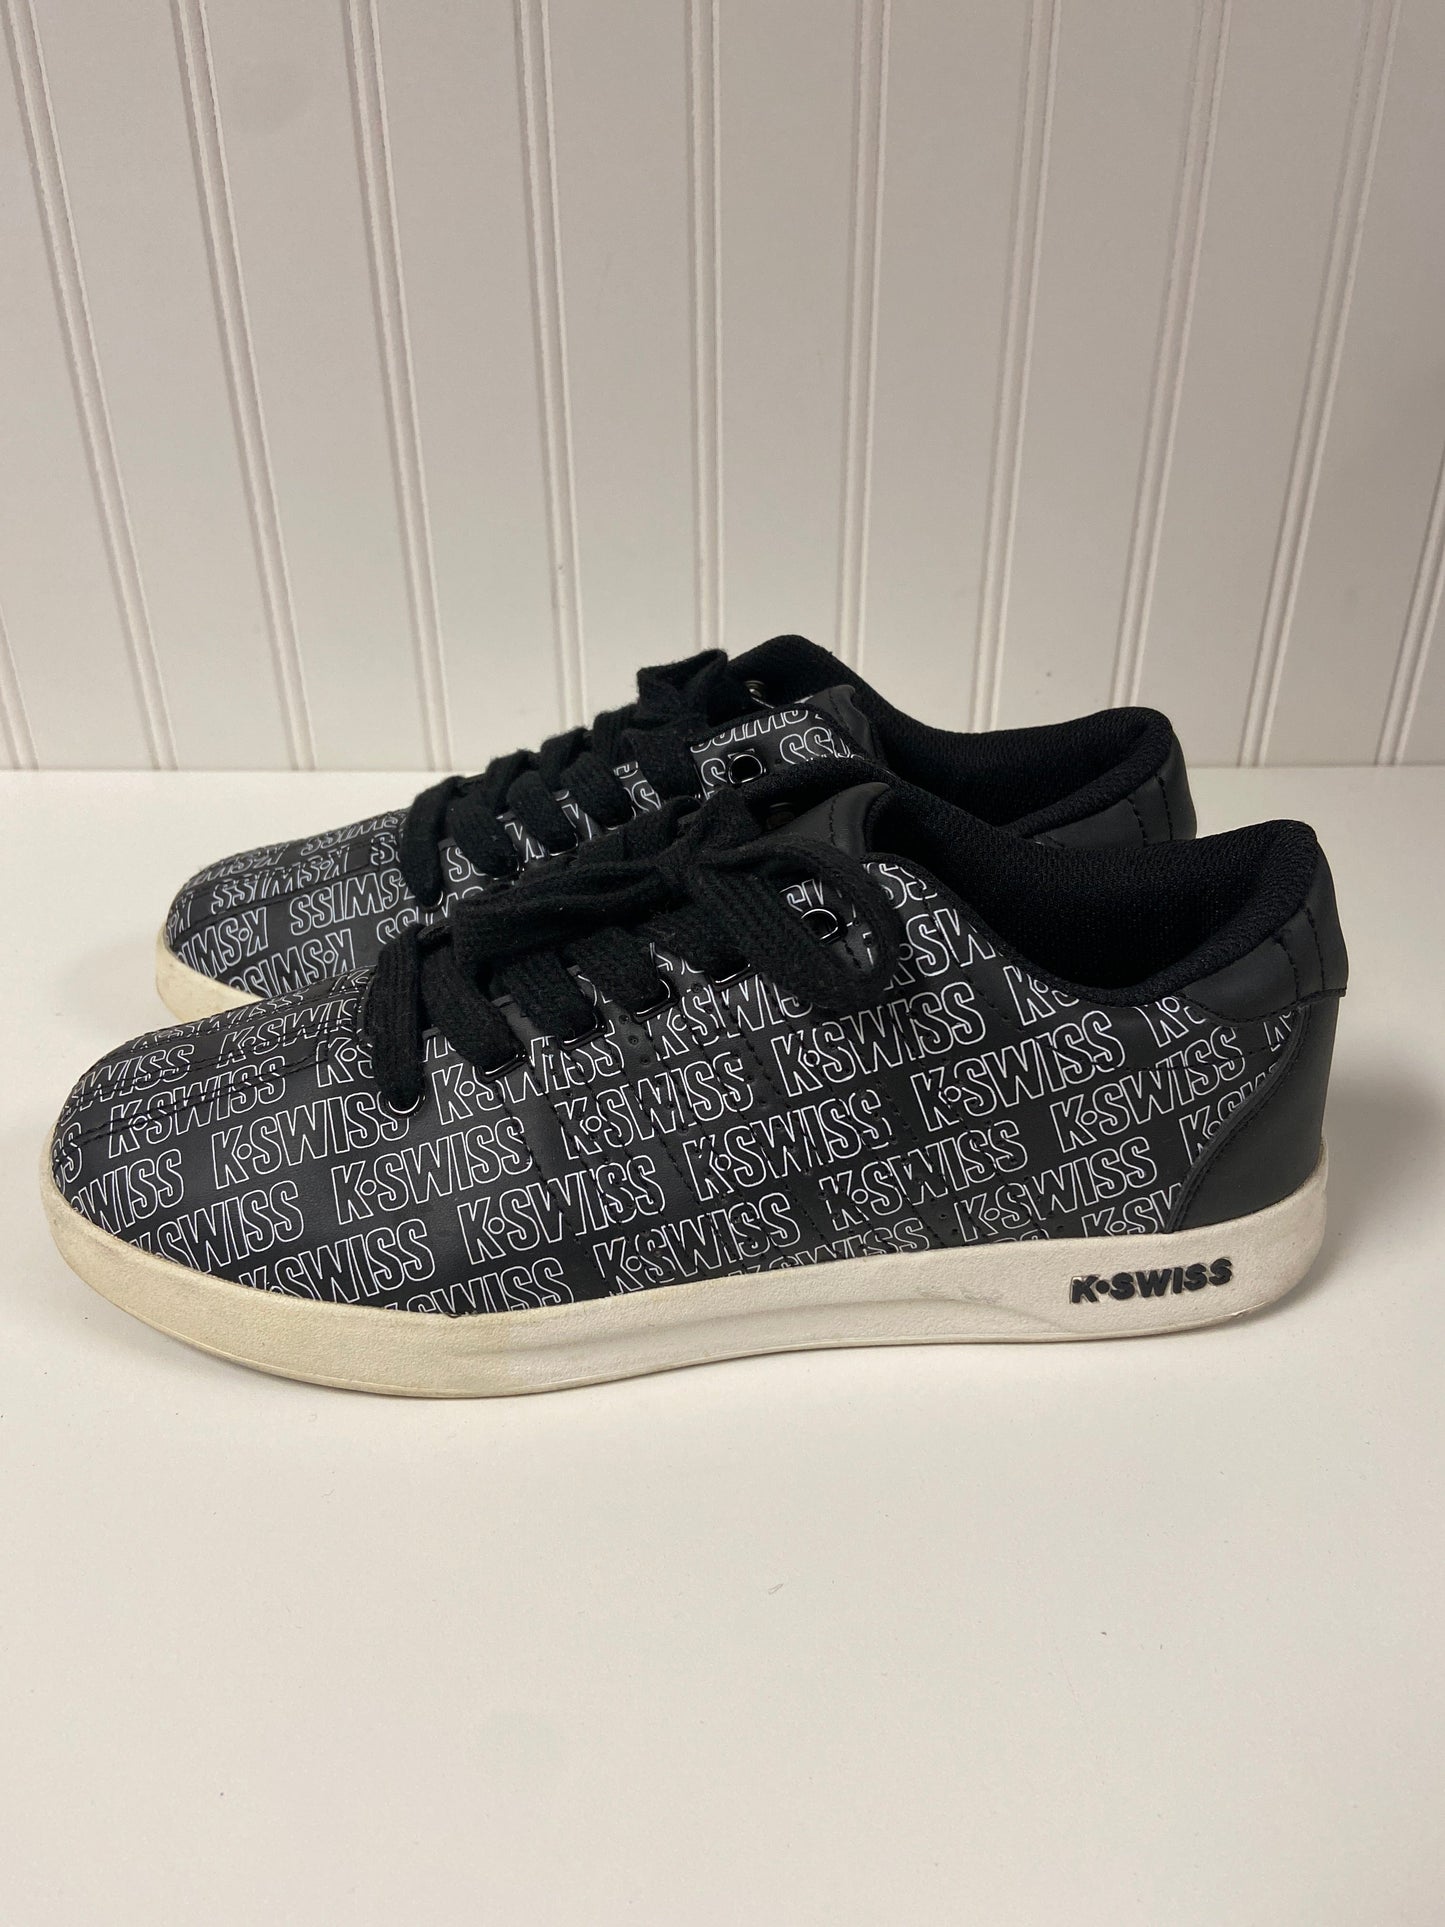 Black & White Shoes Sneakers K Swiss, Size 6